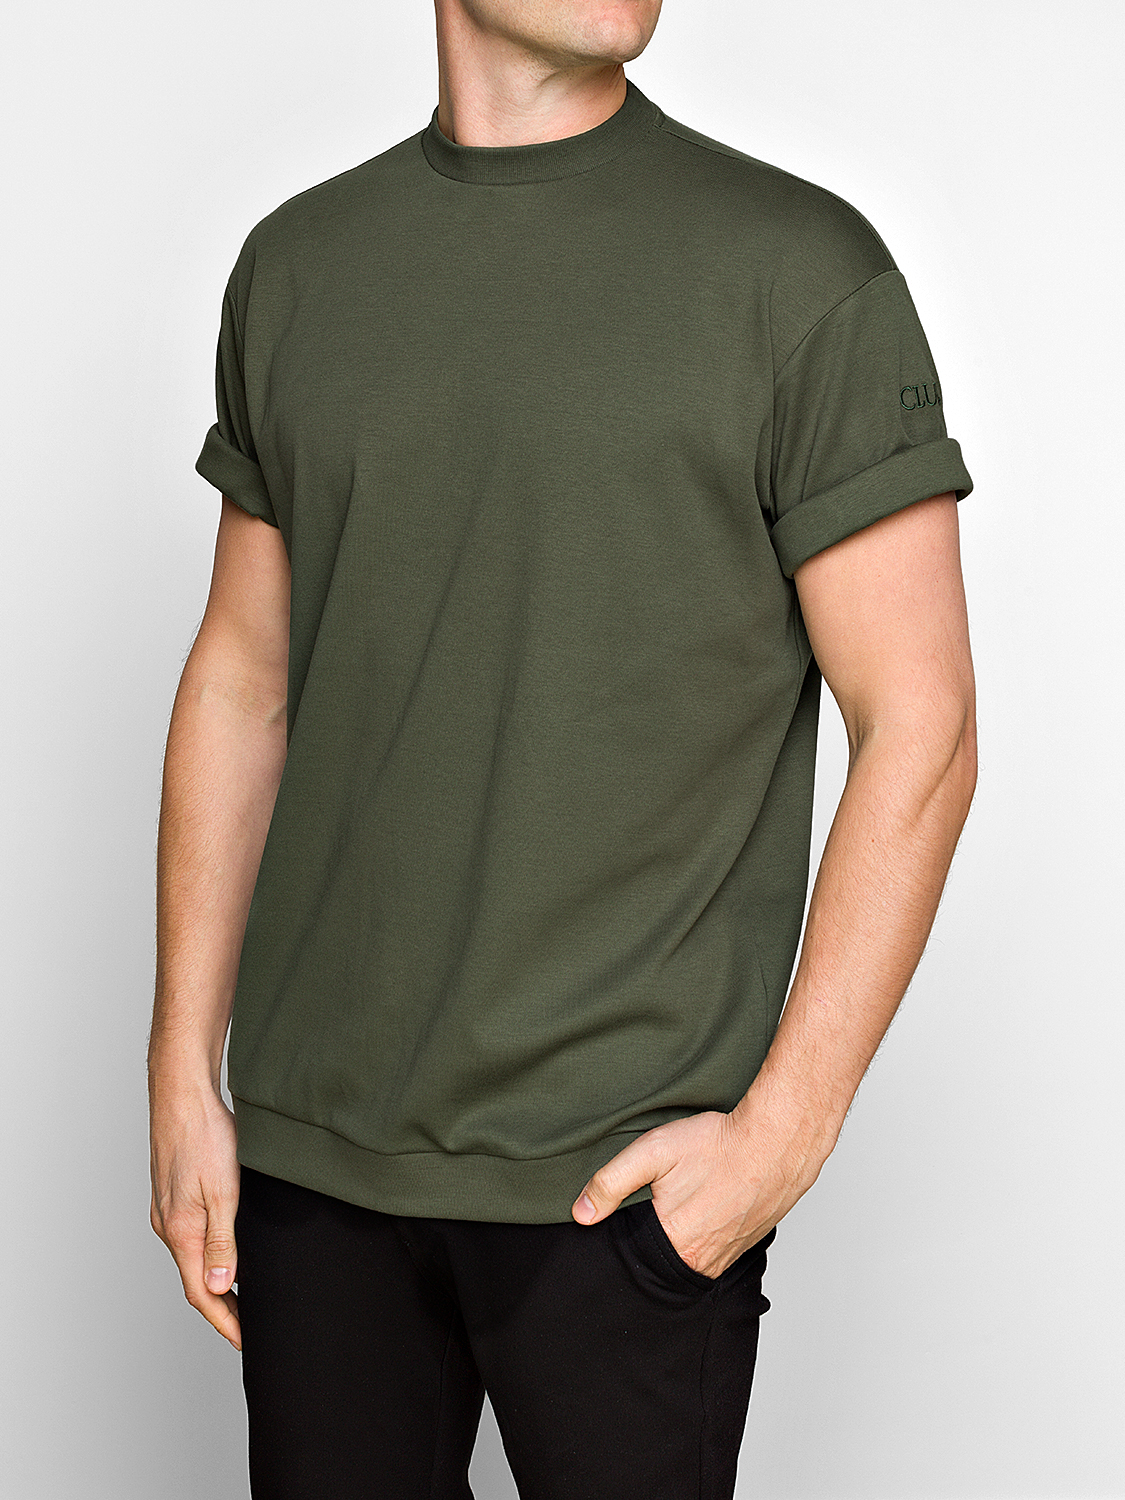 Freedom Fit T-Shirt - Hunter Green